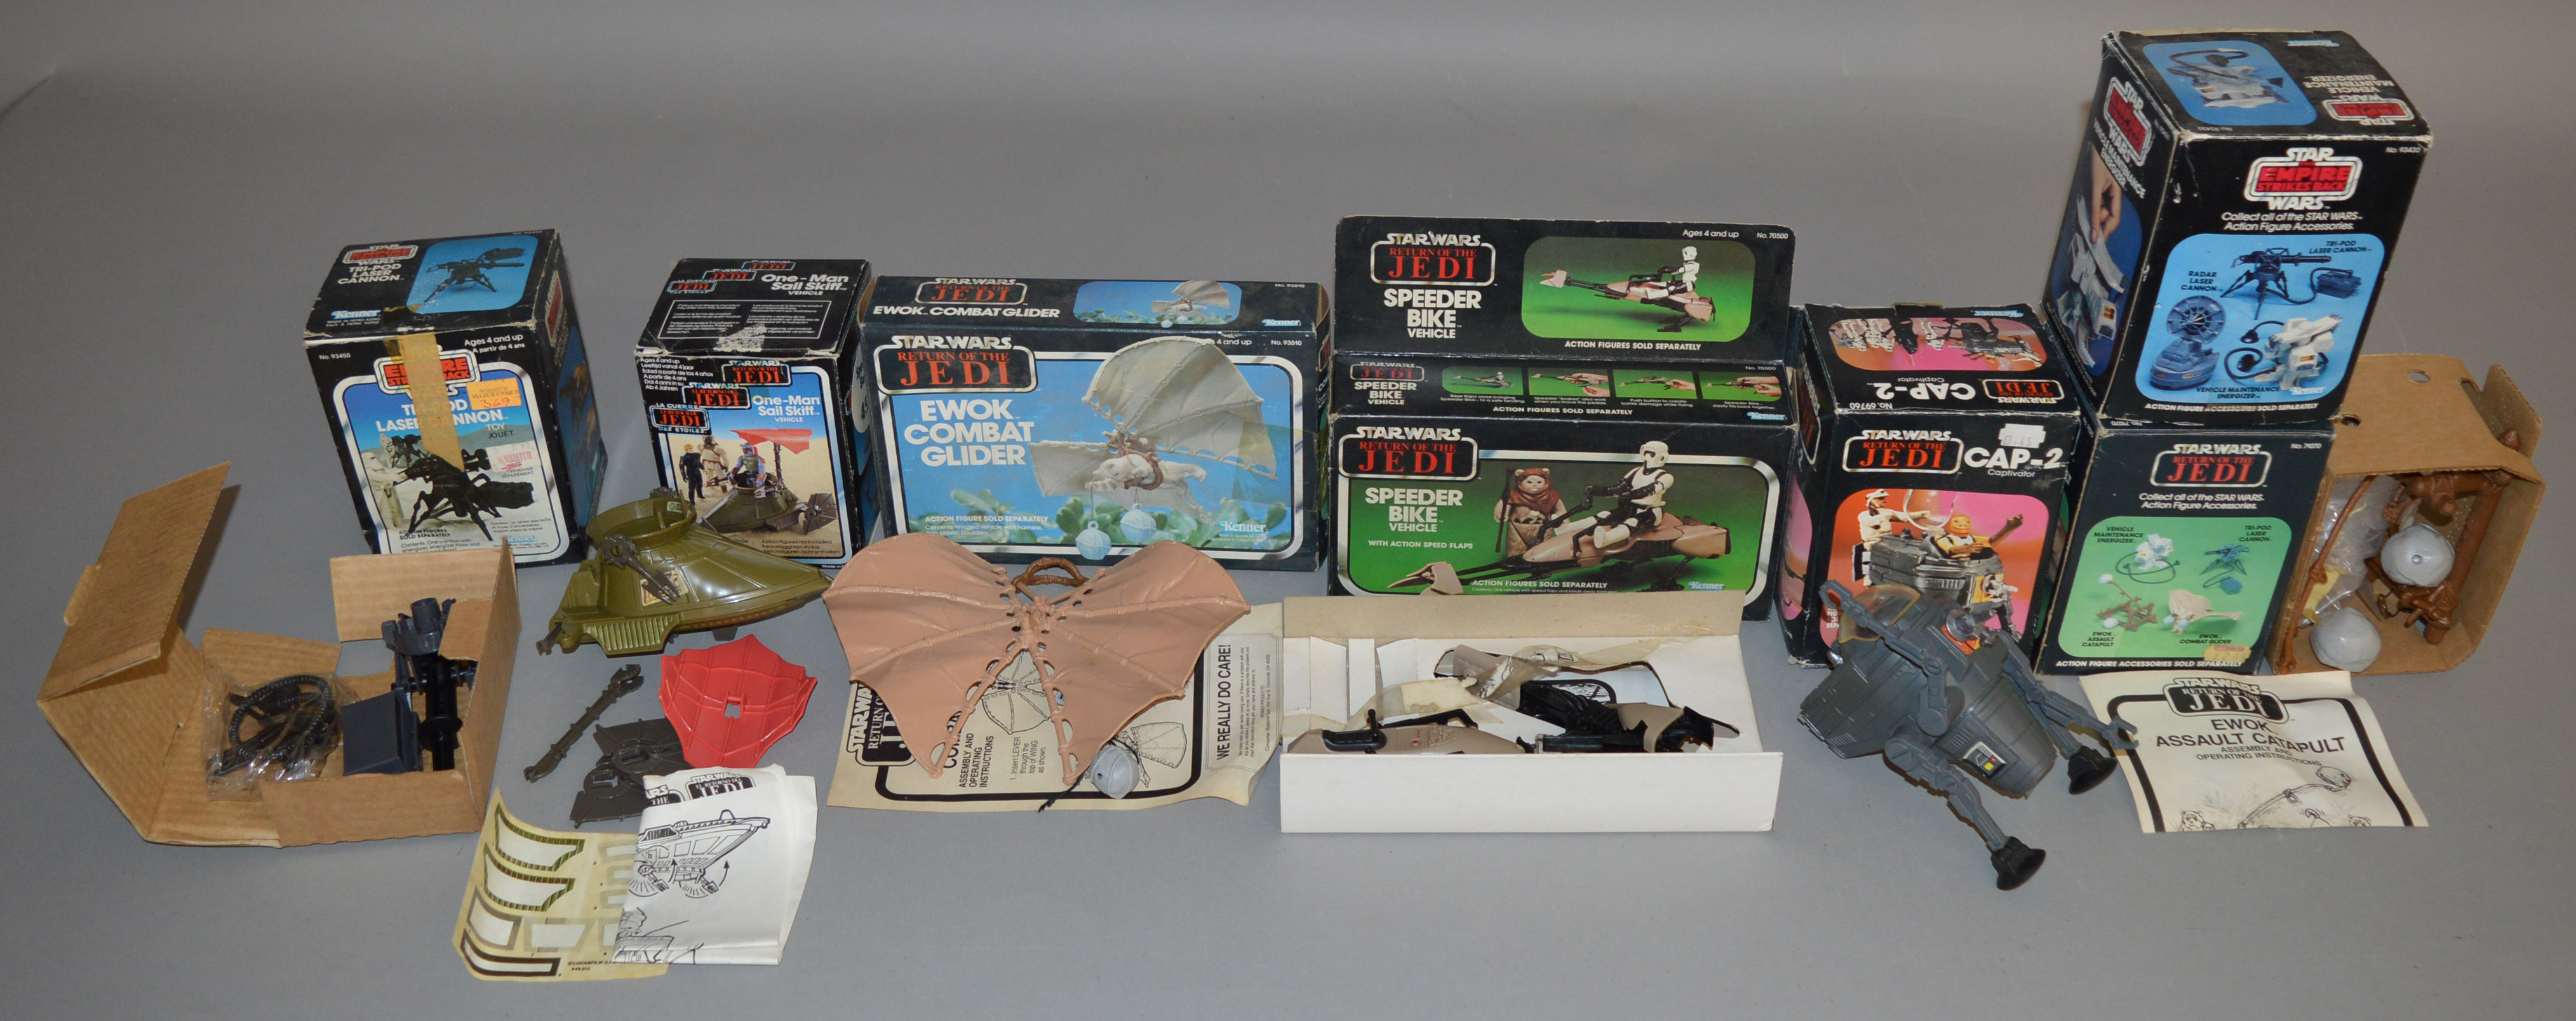 7 Star Wars items; Ewok Assault Catapult, Ewok Combat Glider, CAP-2, Vehicle Maintenance